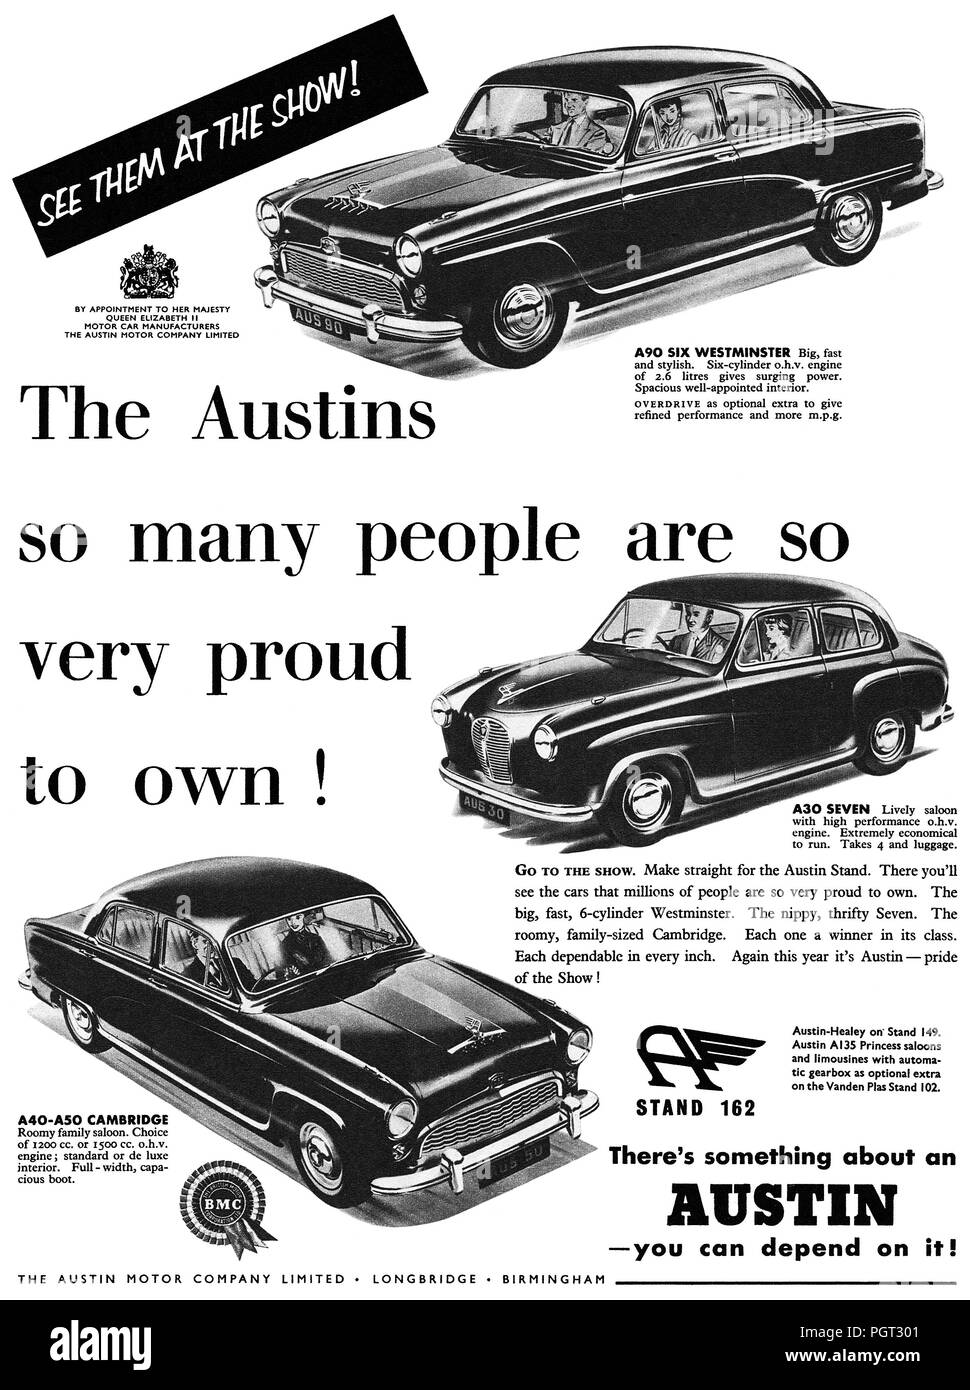 1955 British advertisement for Austin motor cars. Stock Photo